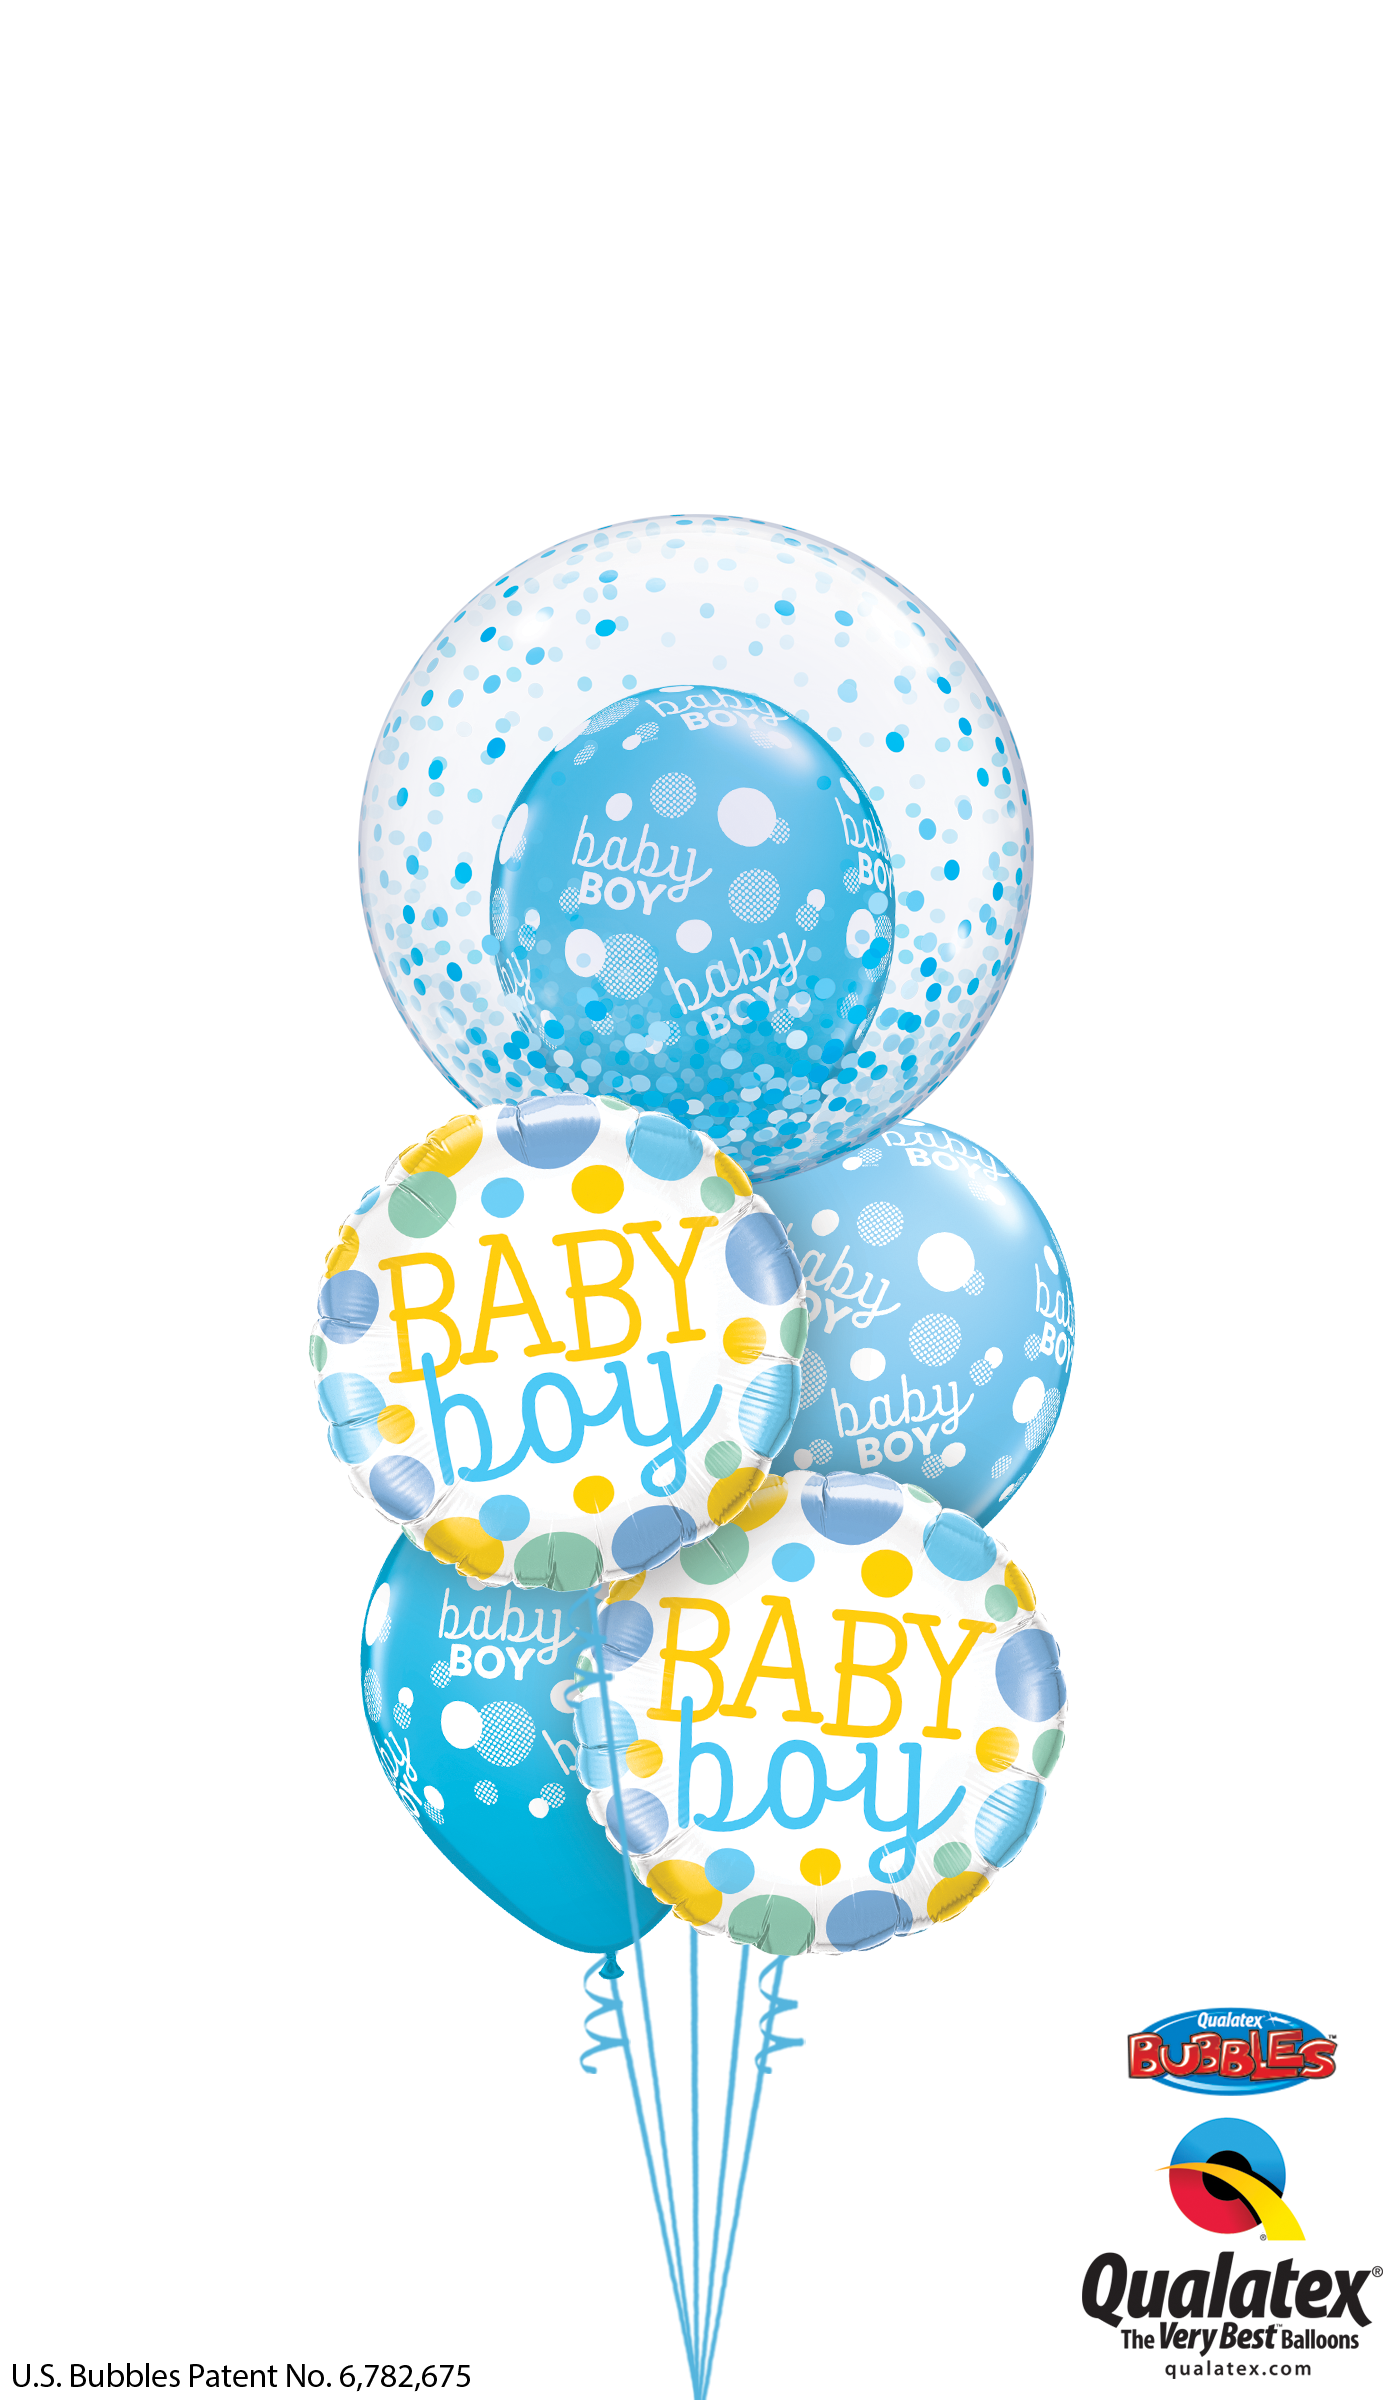 Download Baby Boy Confetti Bubble Balloon Bouquet Qualatex Bubble Balloon Confetti Png Image With No Background Pngkey Com